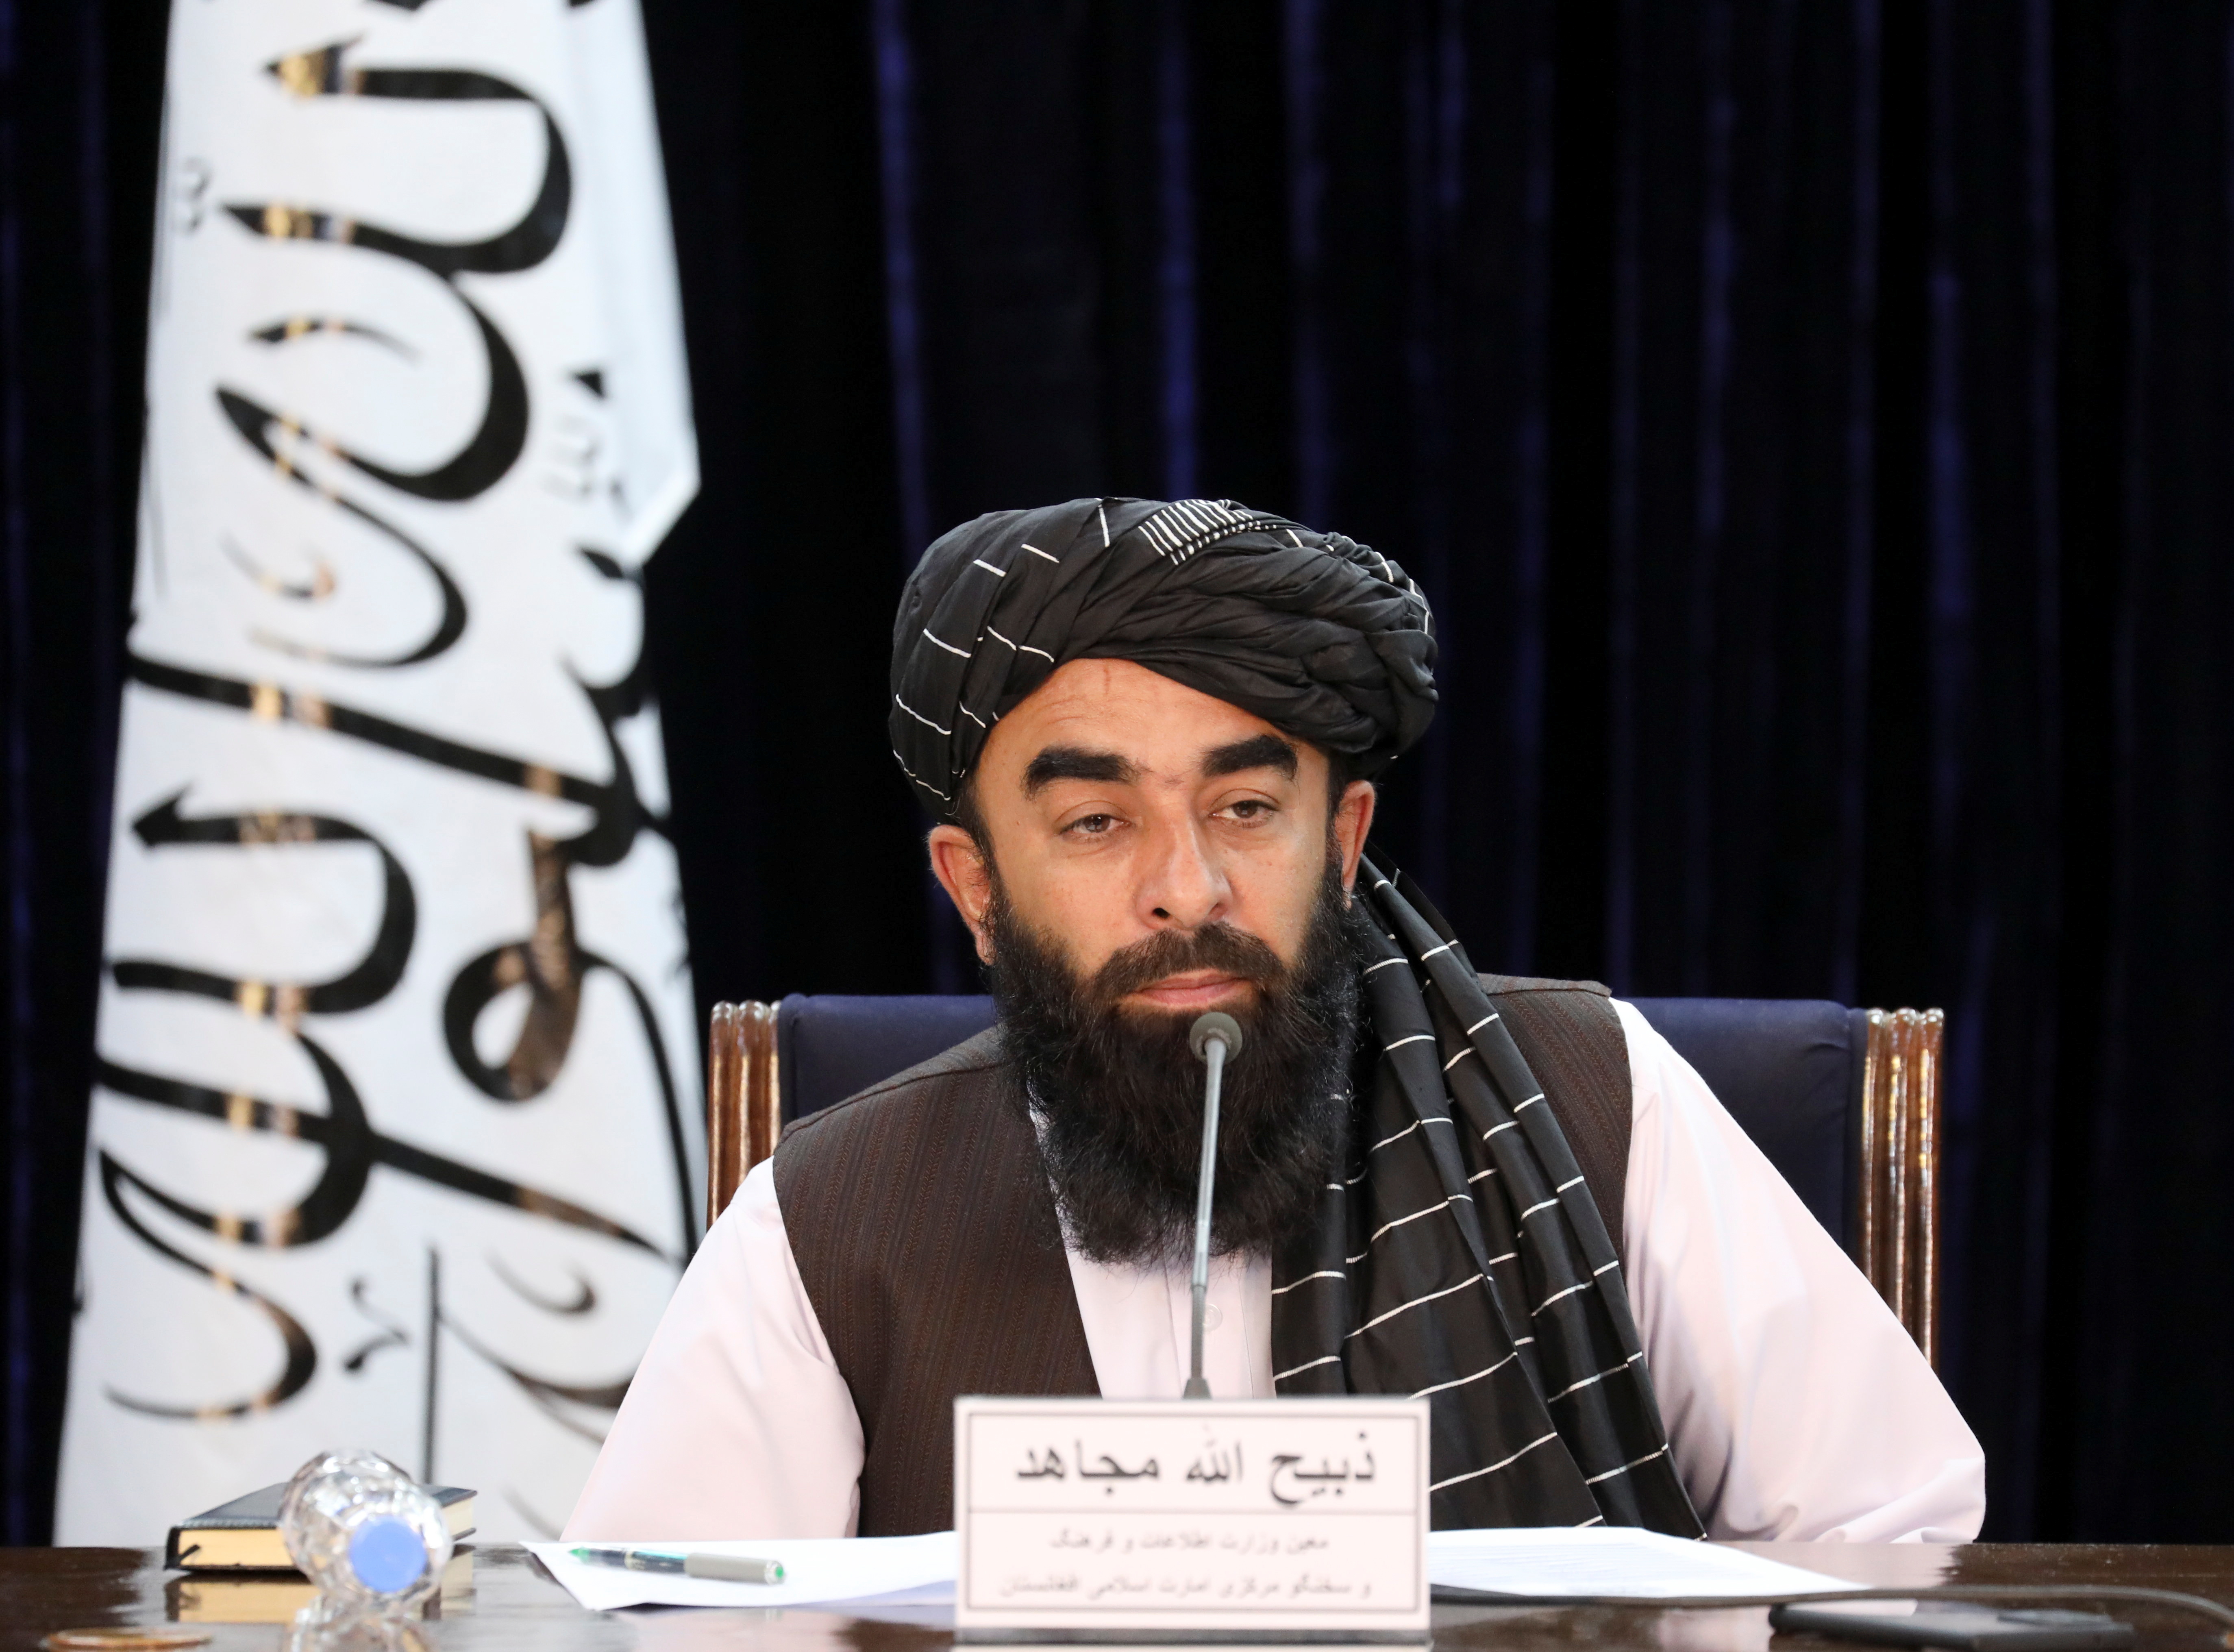 Taliban spokesman Zabihullah Mujahid speaks during news conference in Kabul